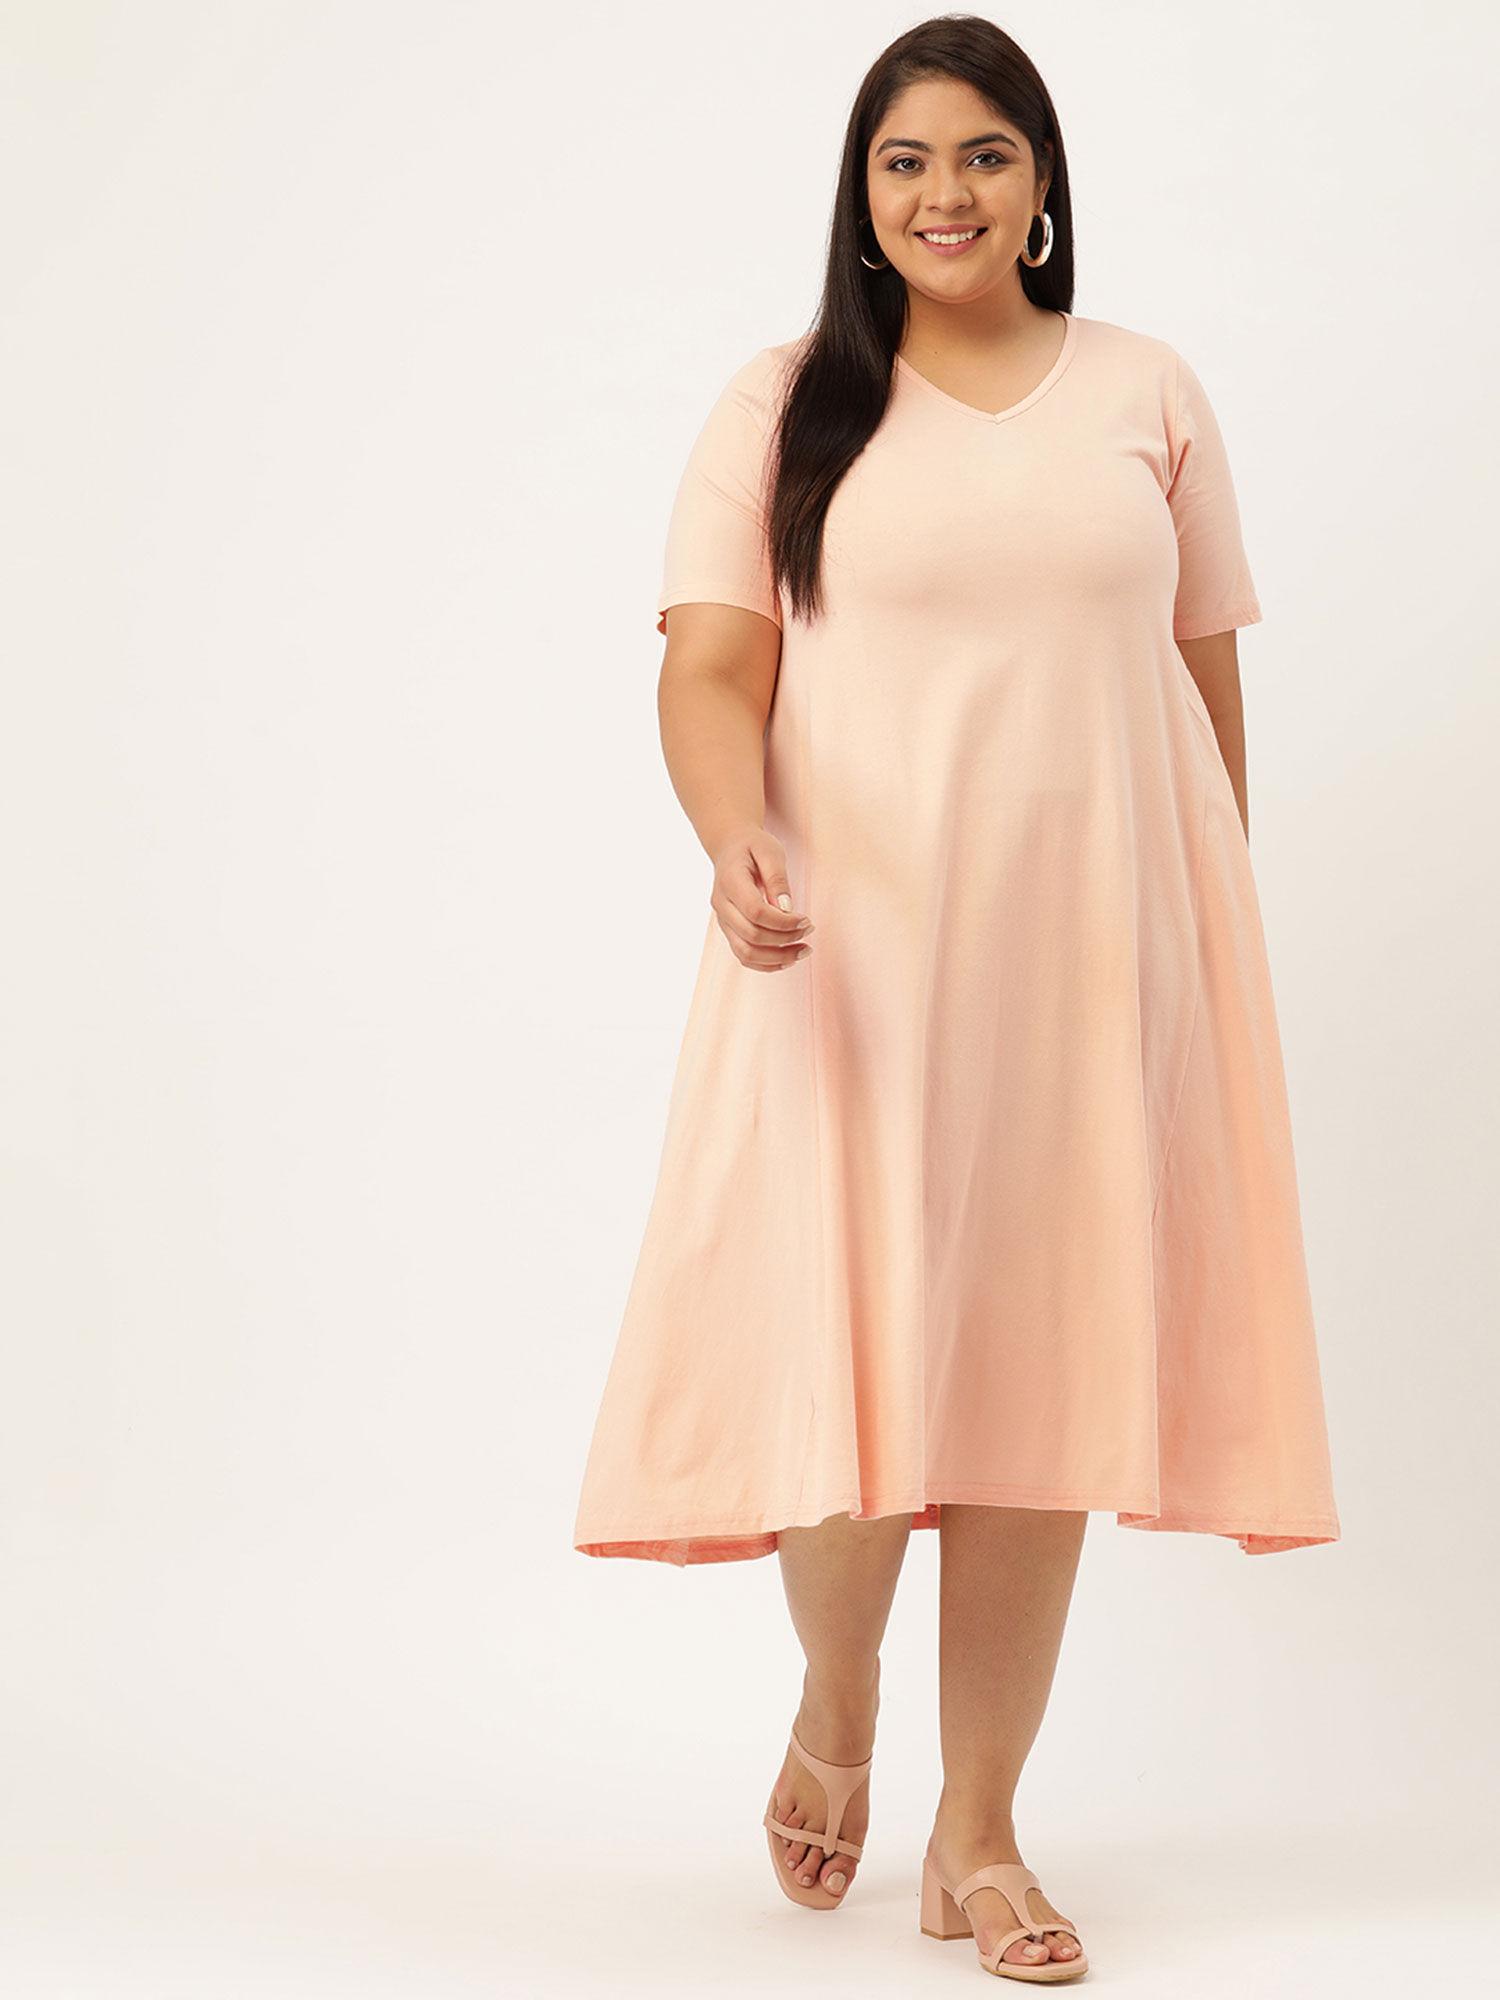 women's light peach solid color v-neck cotton a-line dress